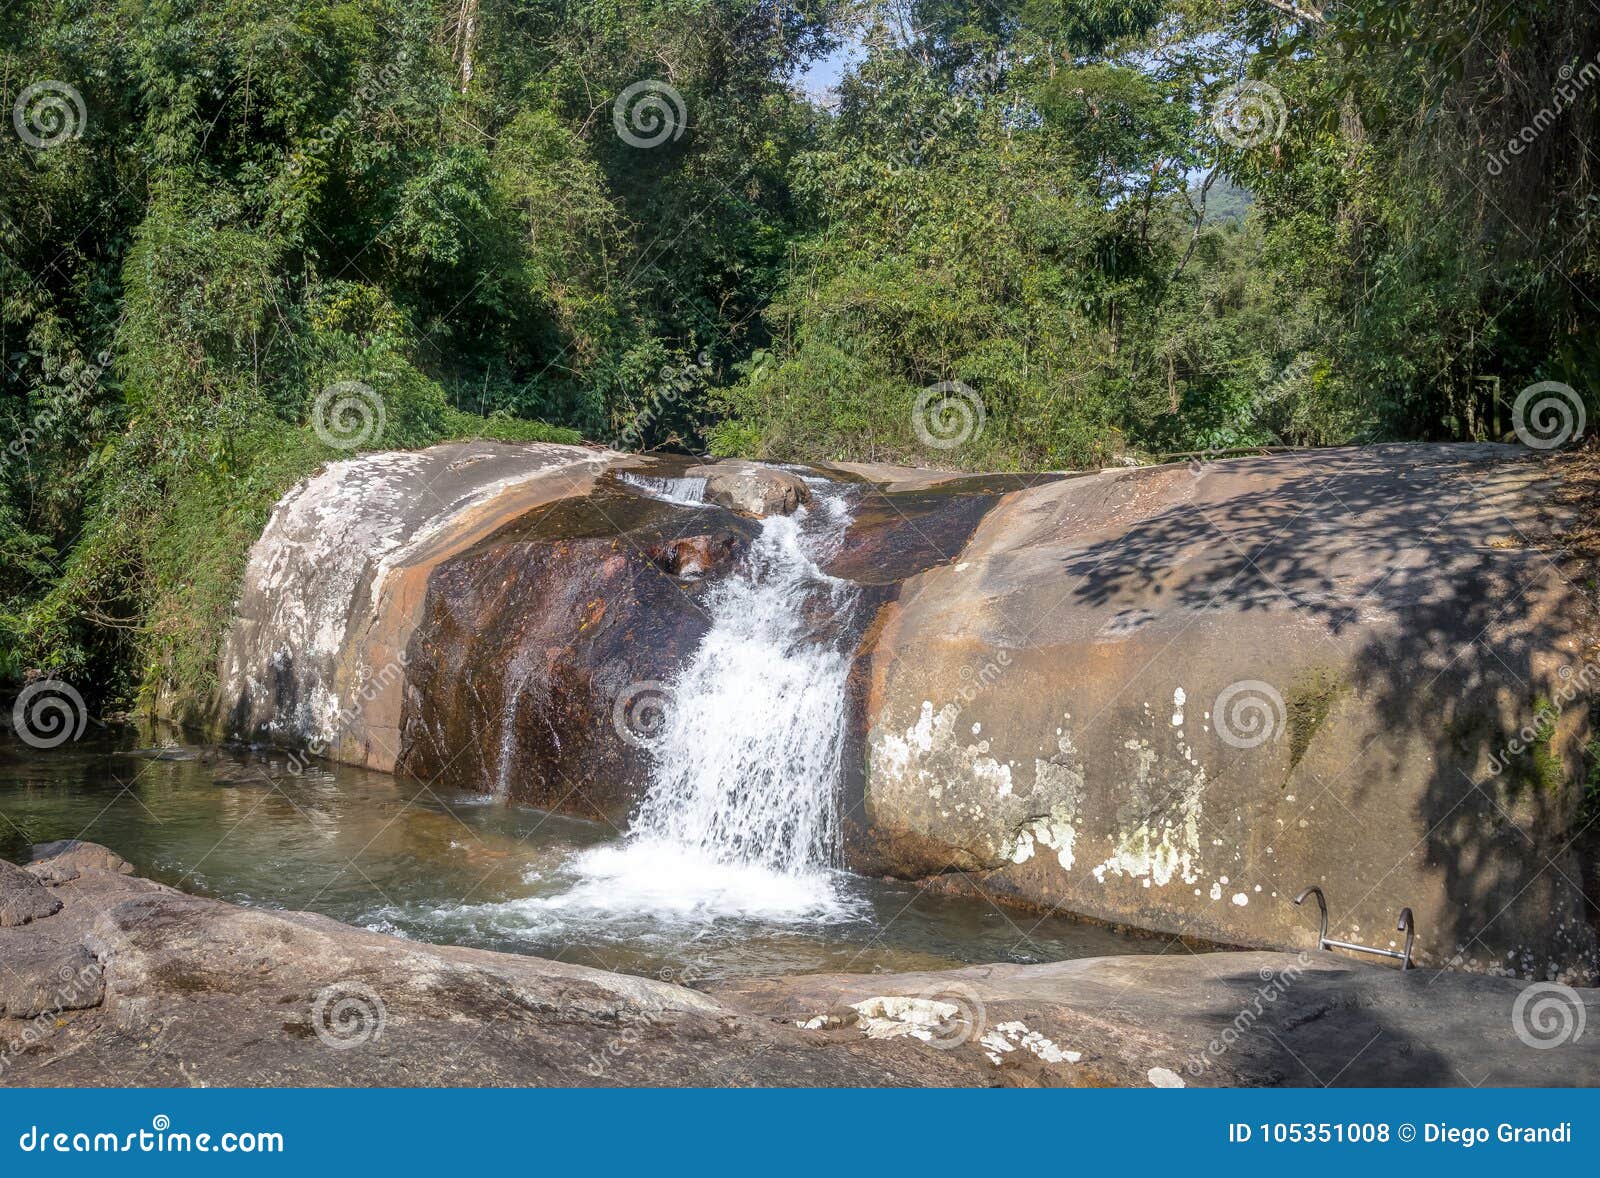 cachoeira da toca waterfall - ilhabela, sao paulo, brazil